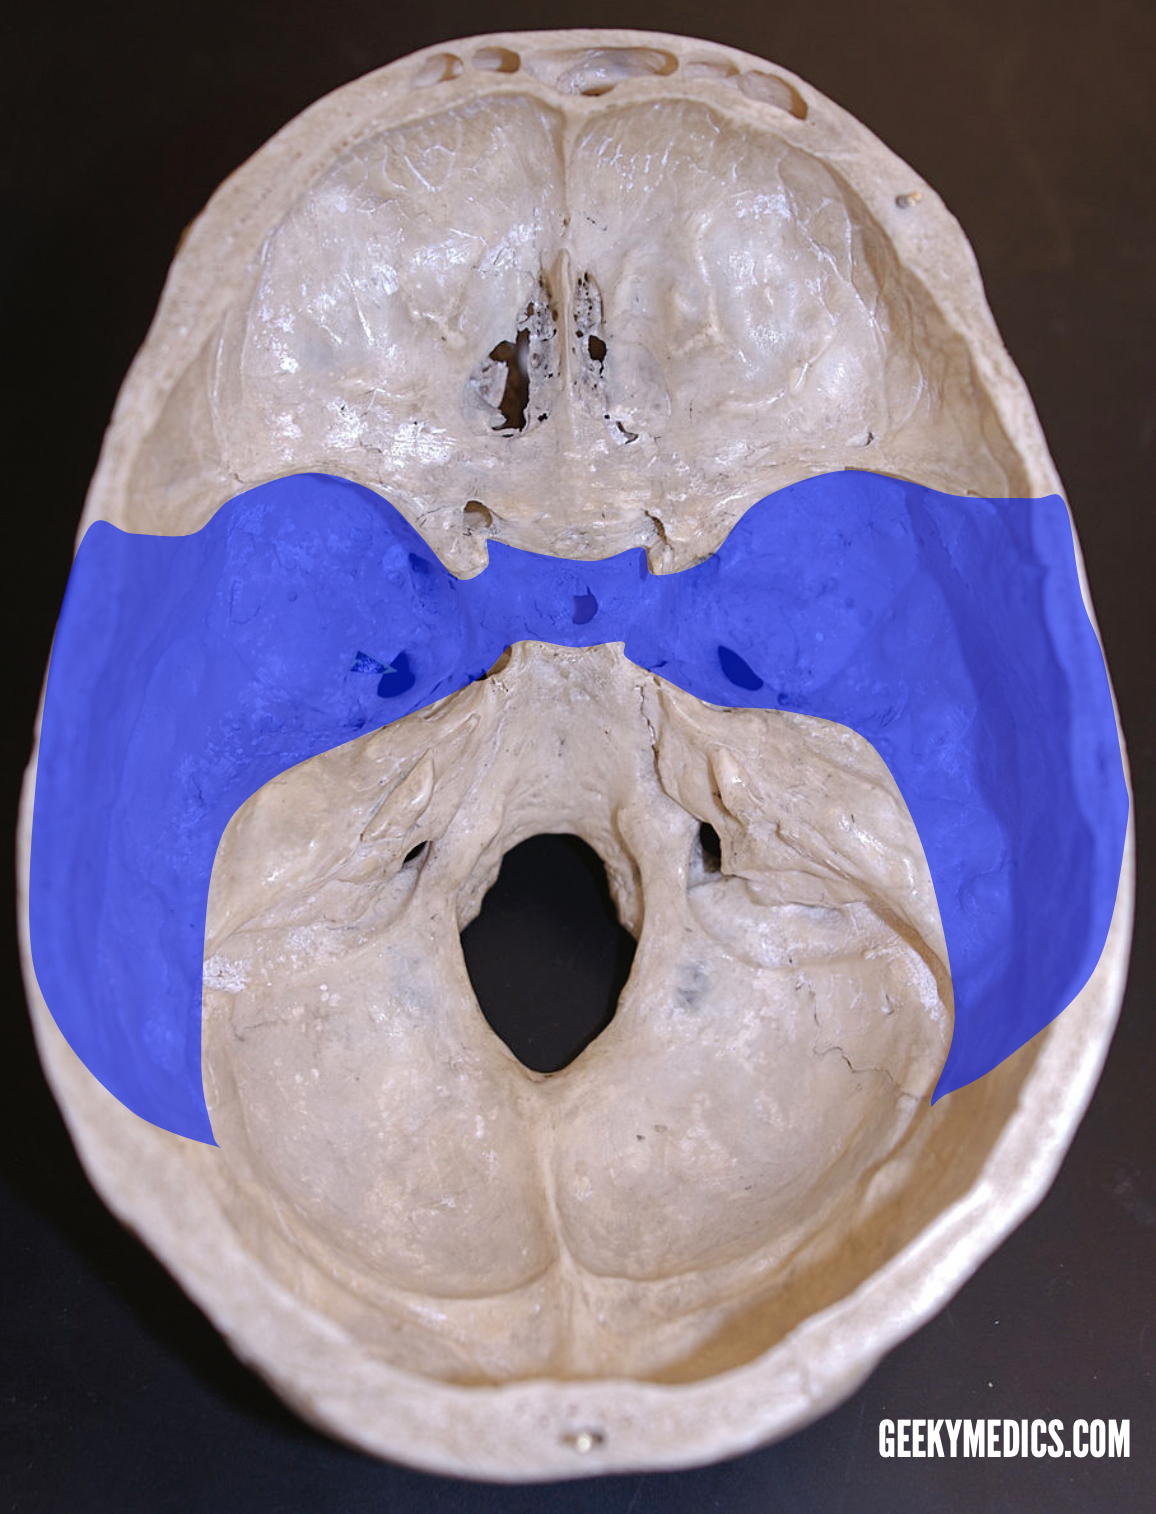 Cranial Foramina | Skull Anatomy | Foramen | Geeky Medics